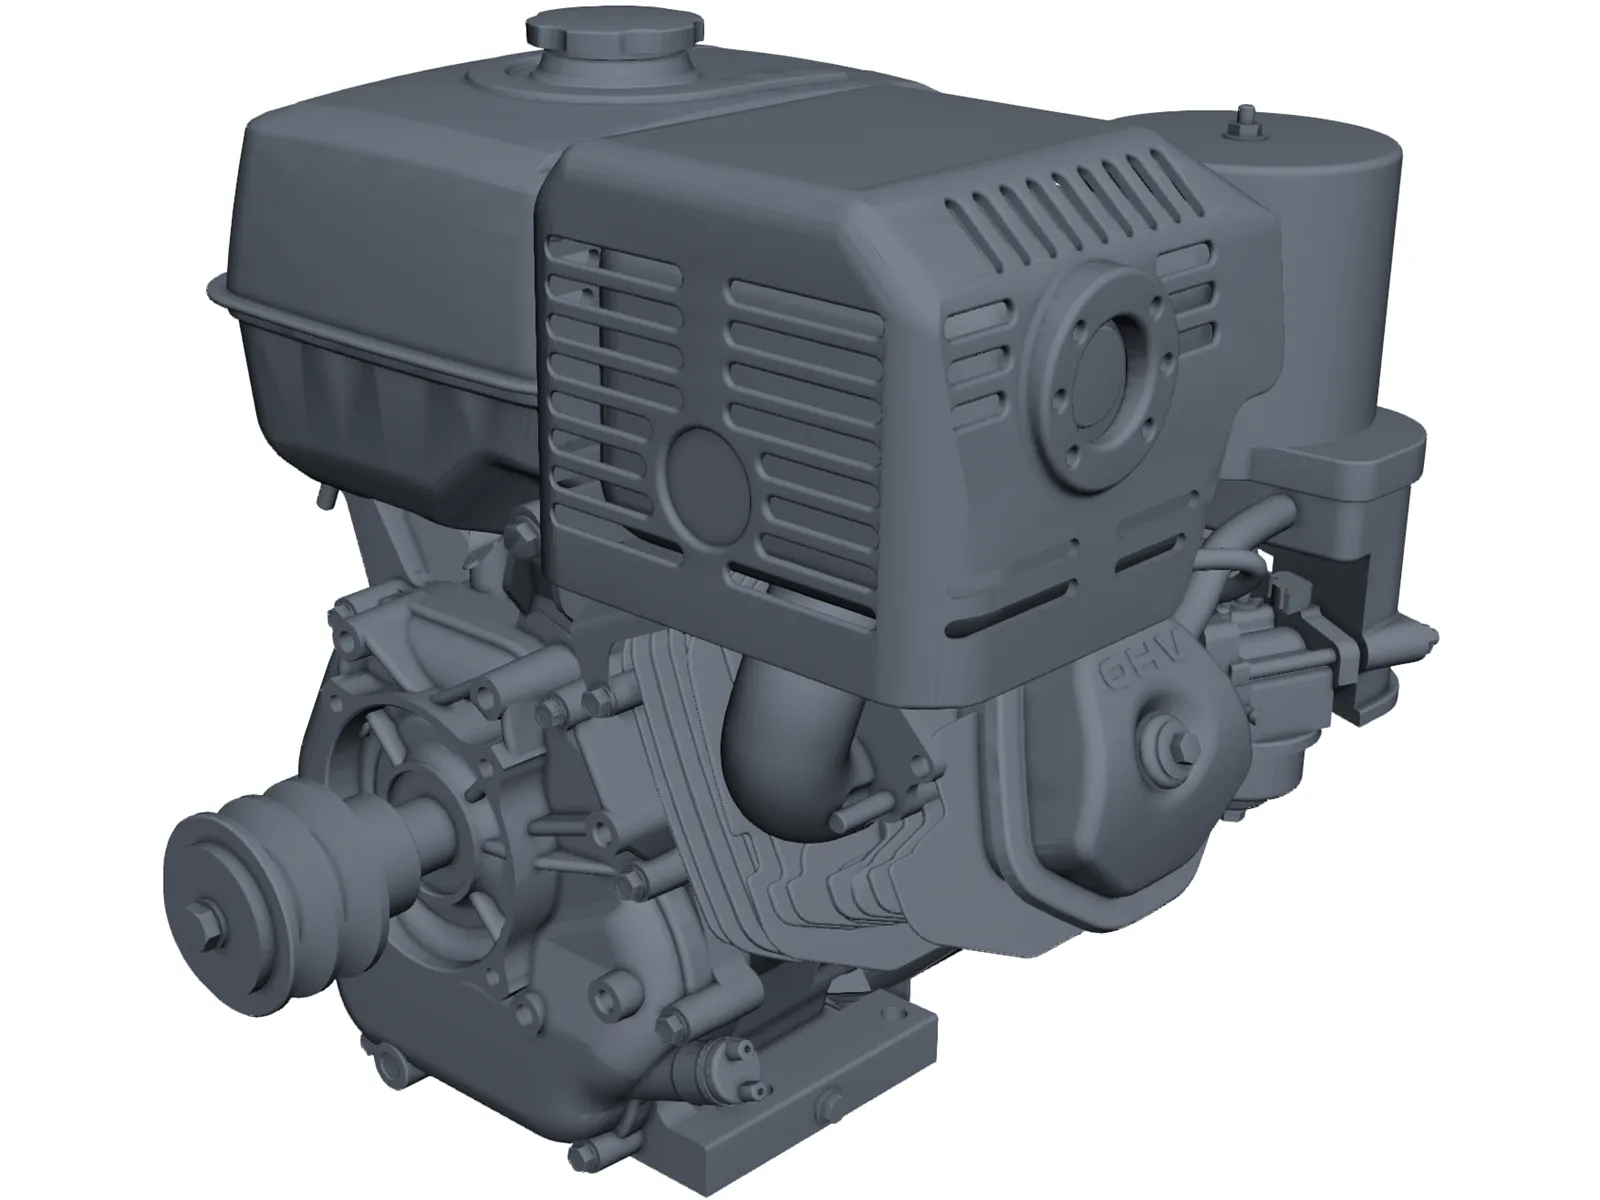 Honda GX-390 Engine 3D Model